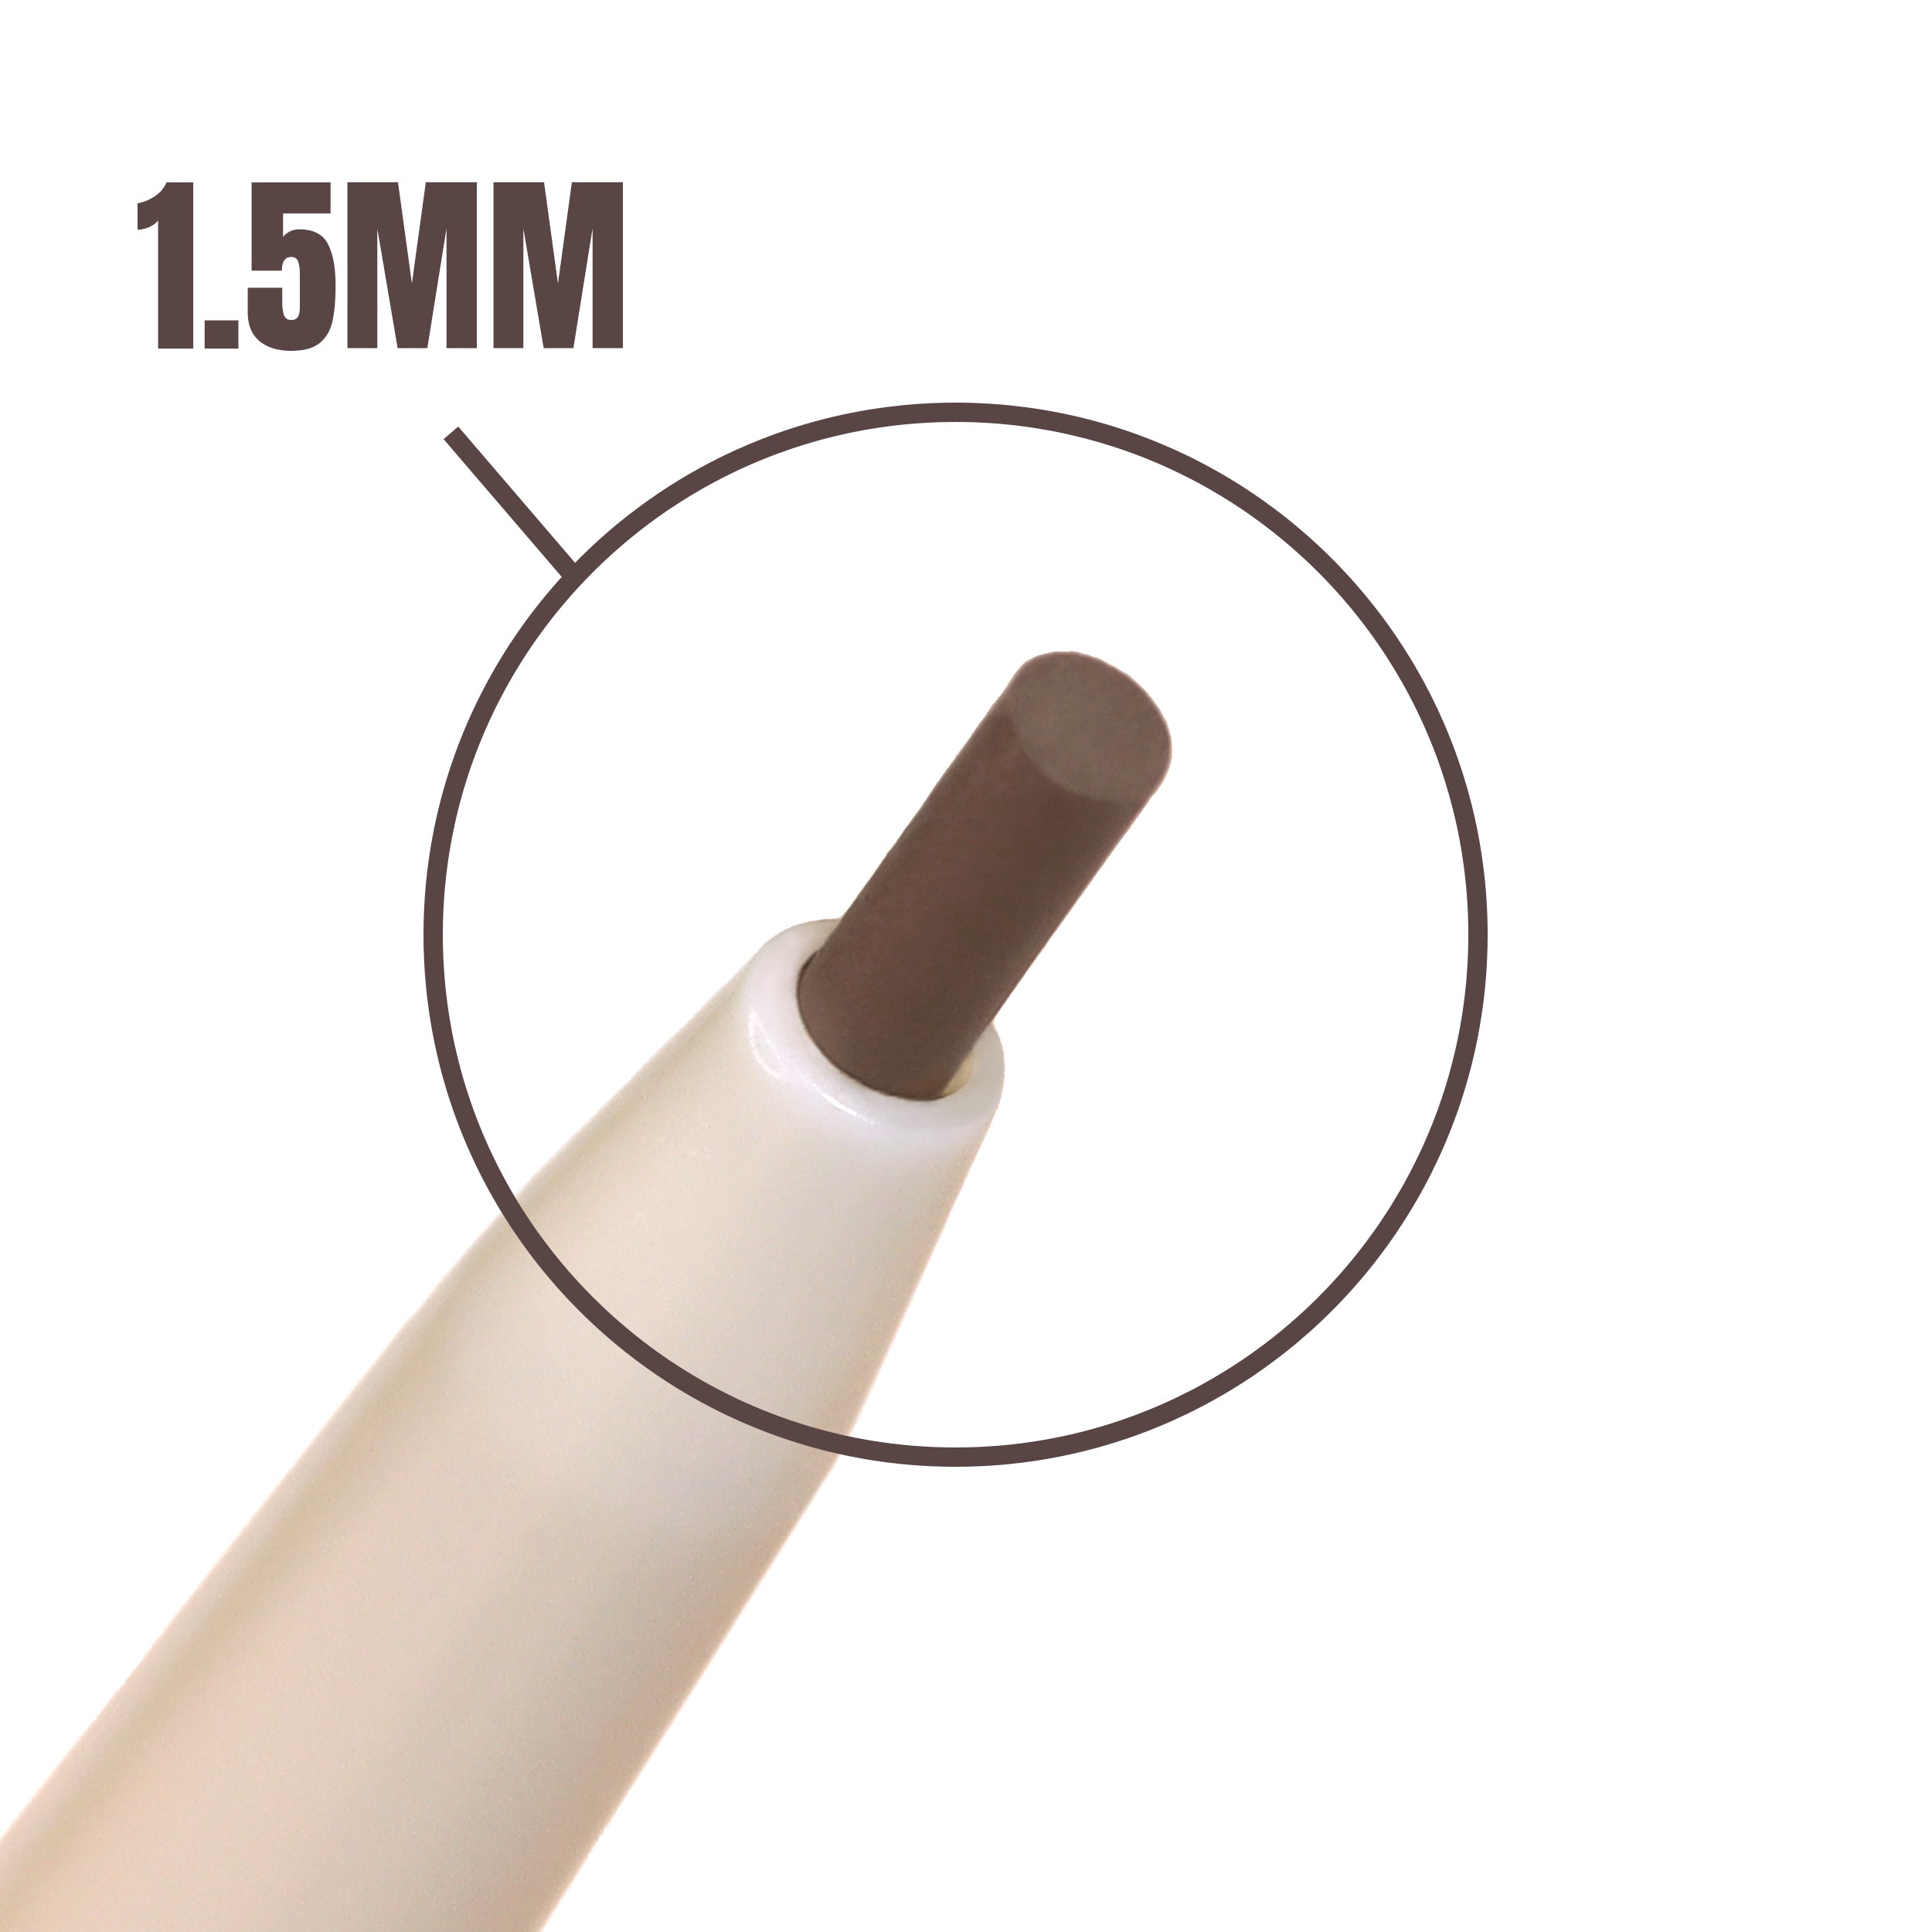 Precision Brow Pencil (002, Blonde Brown)